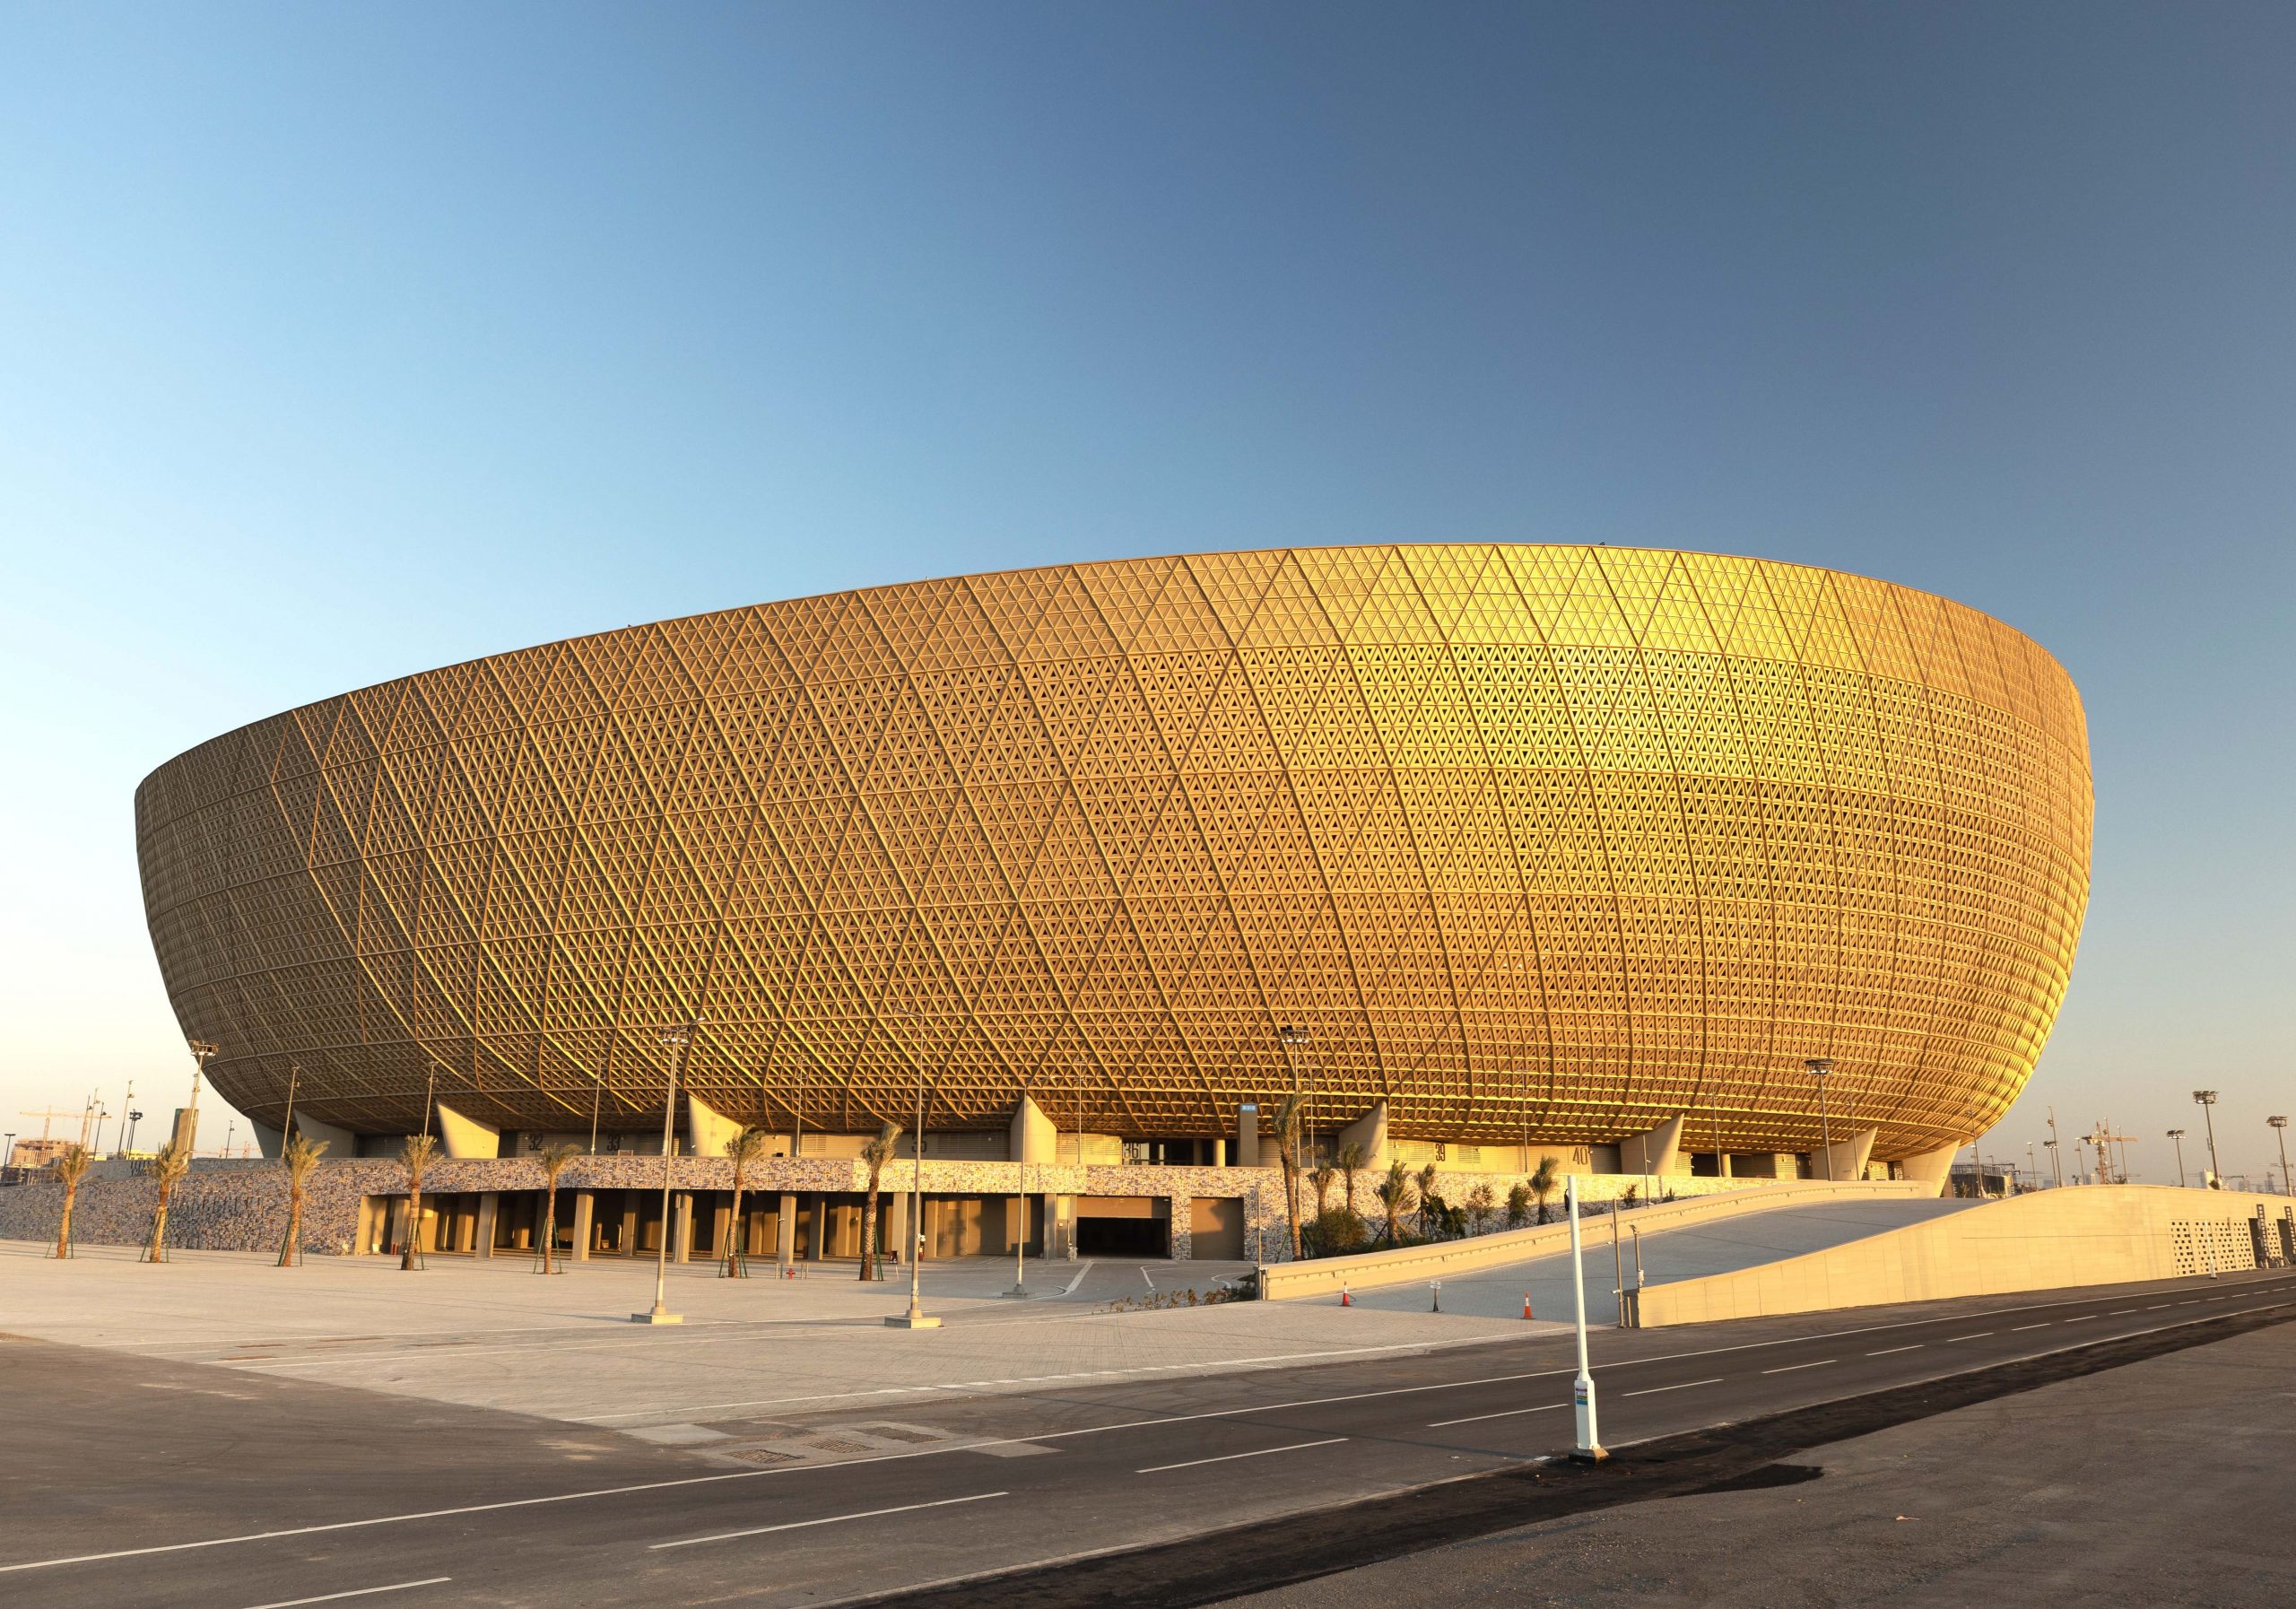 Qatar's Lusail Stadium